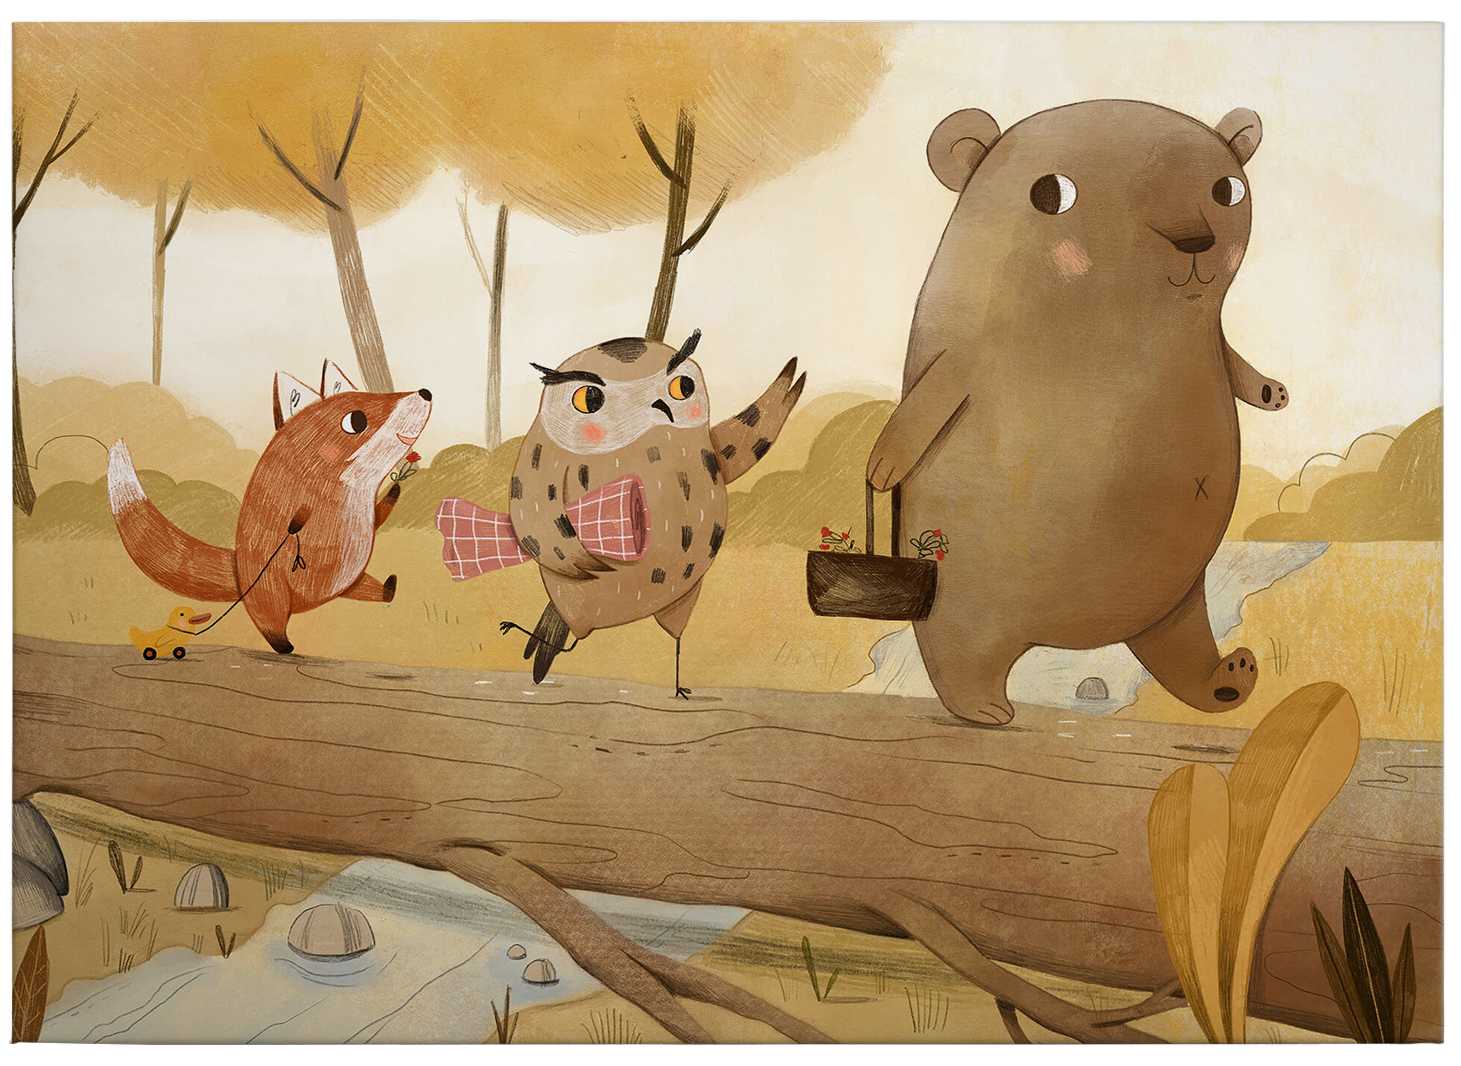             Canvas print forest animal picnic comic design by Loske
        